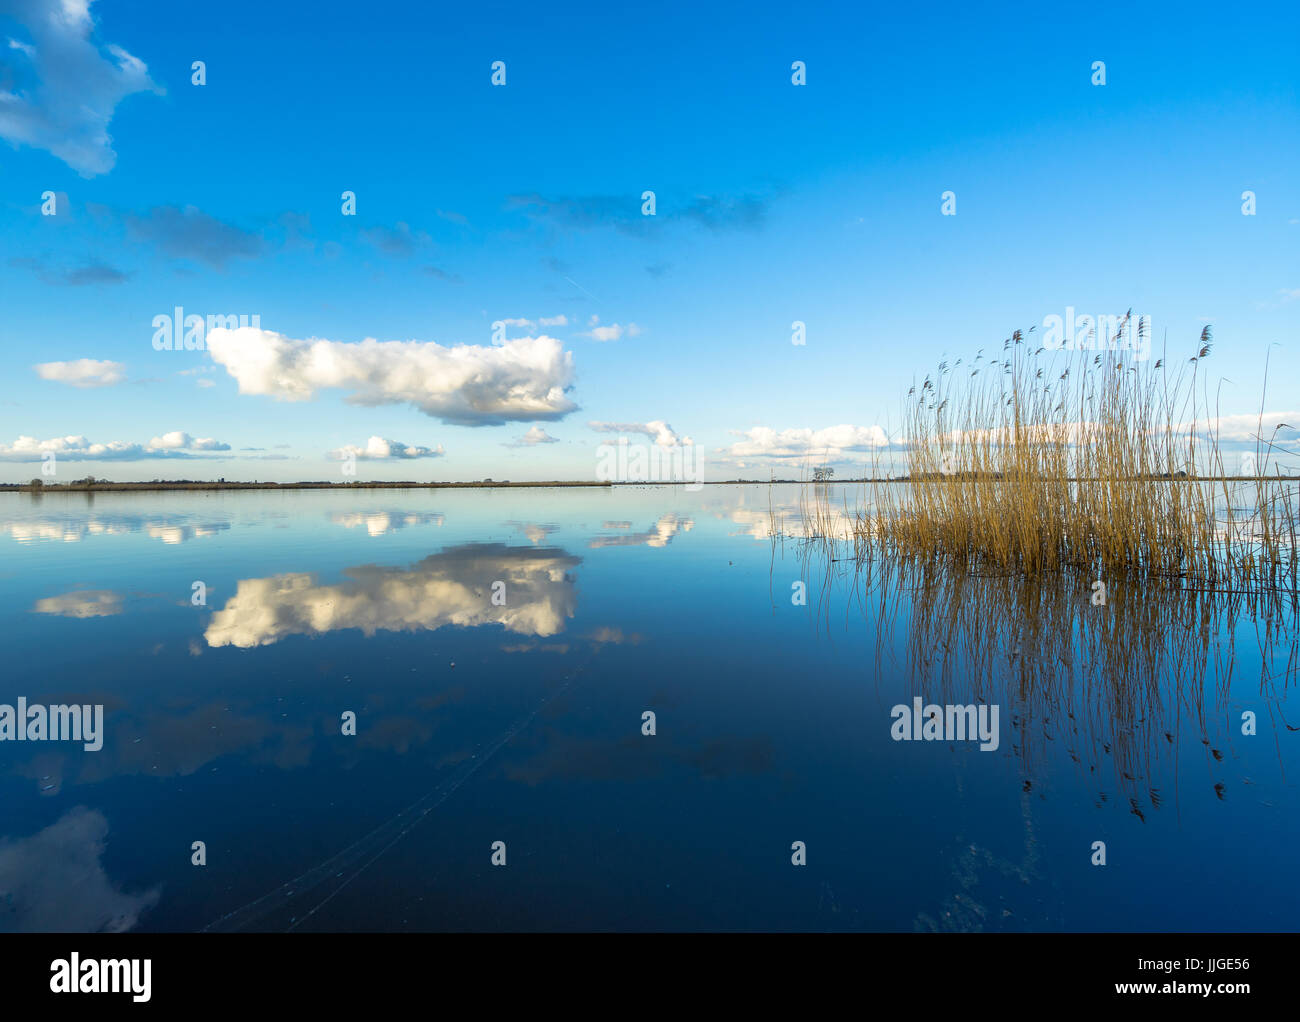 A calm peaceful scene of clouds mirrored in small lake De Leijen, near Sondel, the Netherlands Stock Photo